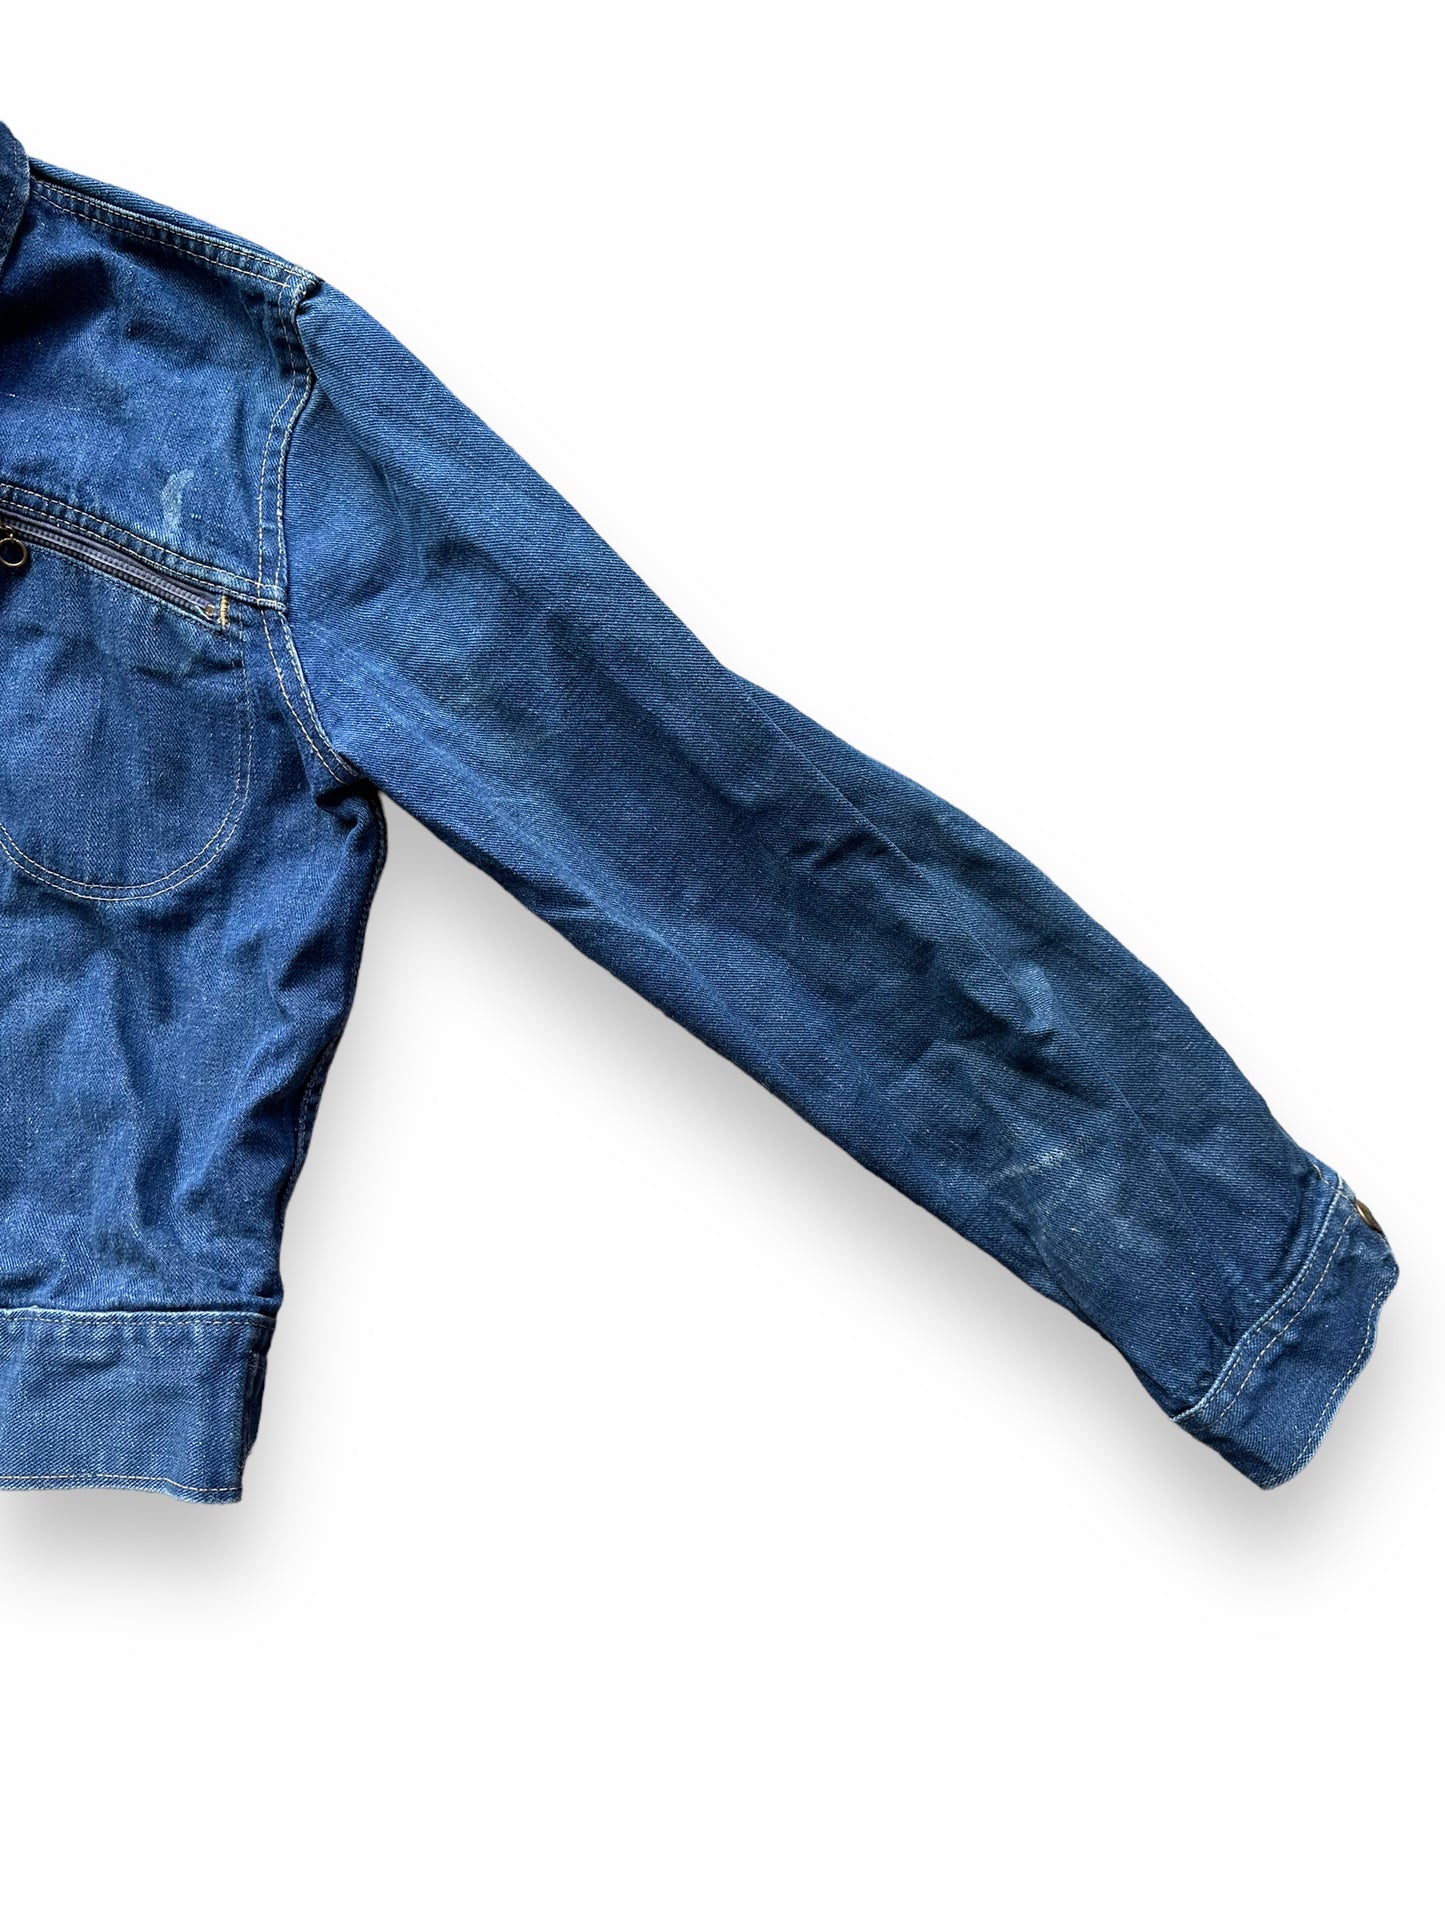 Left Sleeve of Vintage Roebucks Selvedge Denim Jacket SZ S | Vintage Jean Jacket Seattle | Seattle Vintage Denim